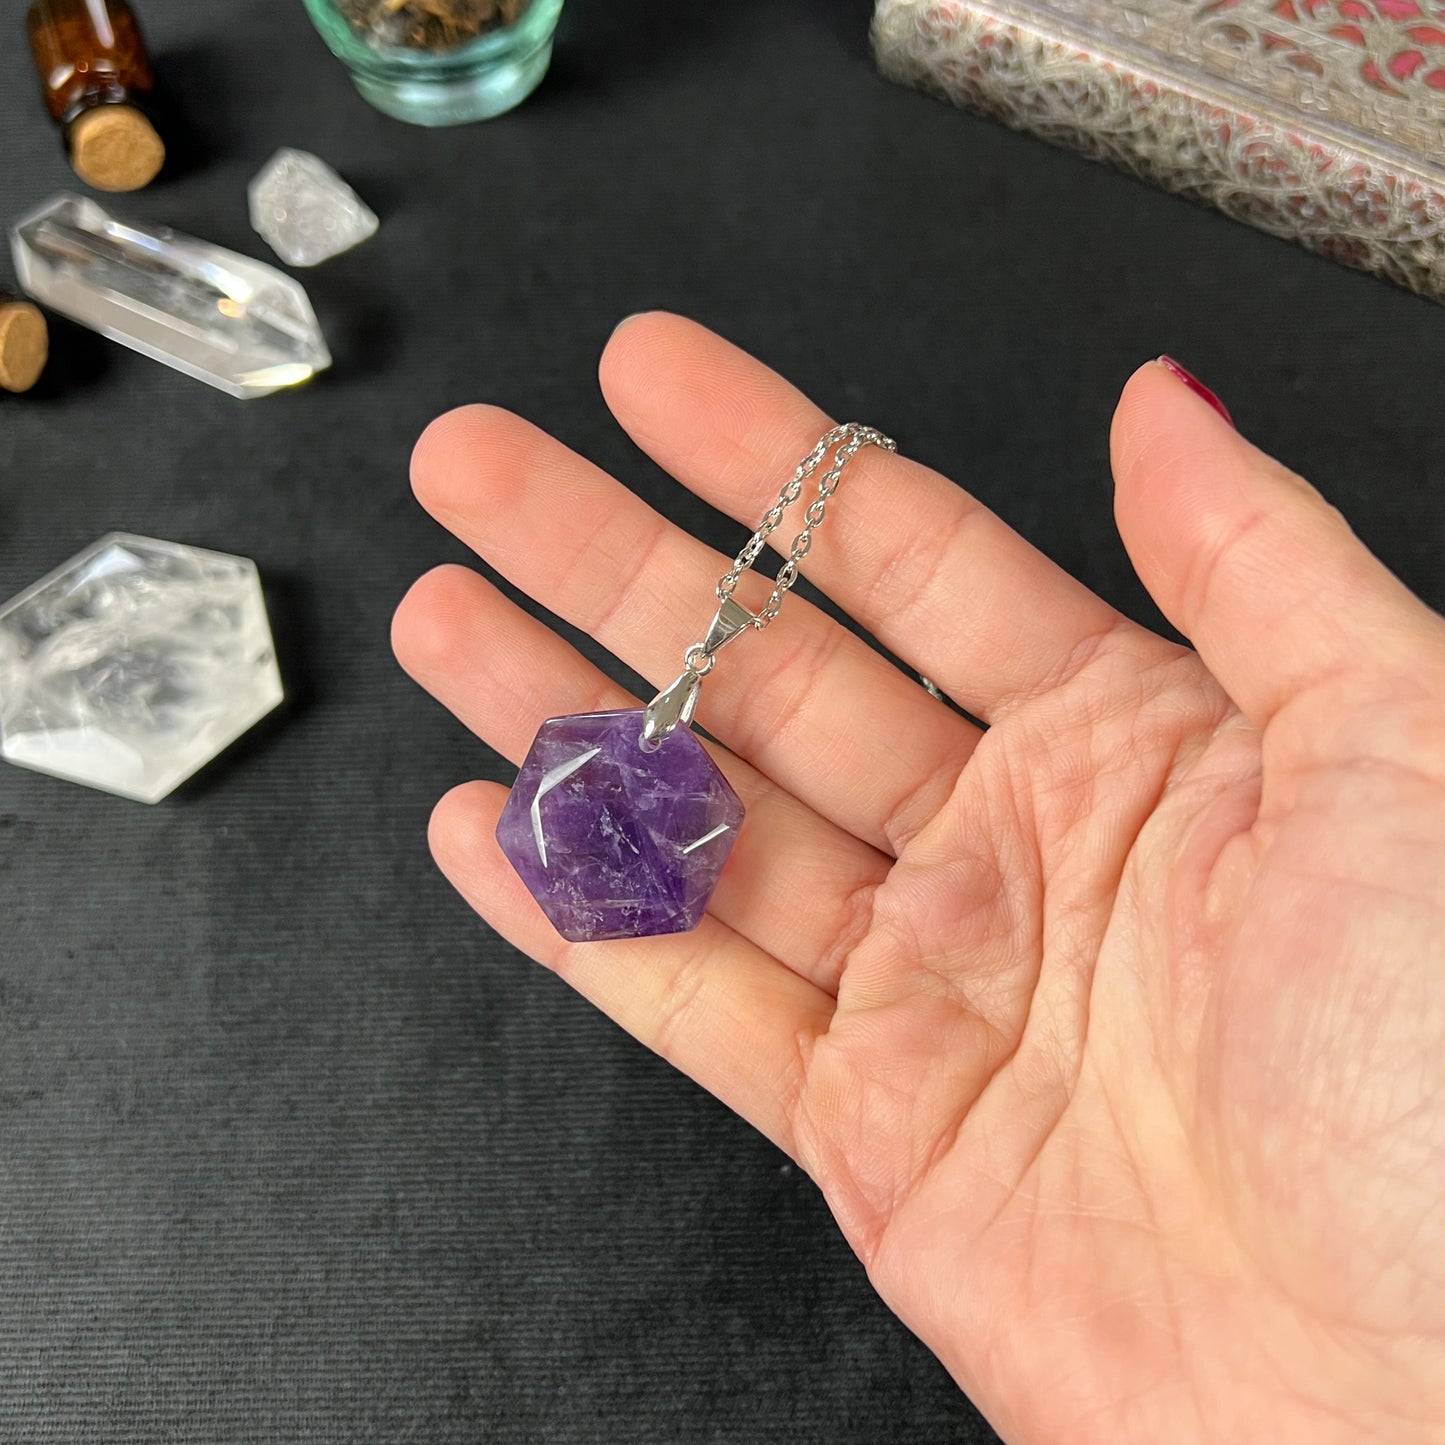 Gemstone hexagon necklace in lapis lazuli, rose quartz, quartz, amethyst or labradorite, crystal necklace with a crescent moon 